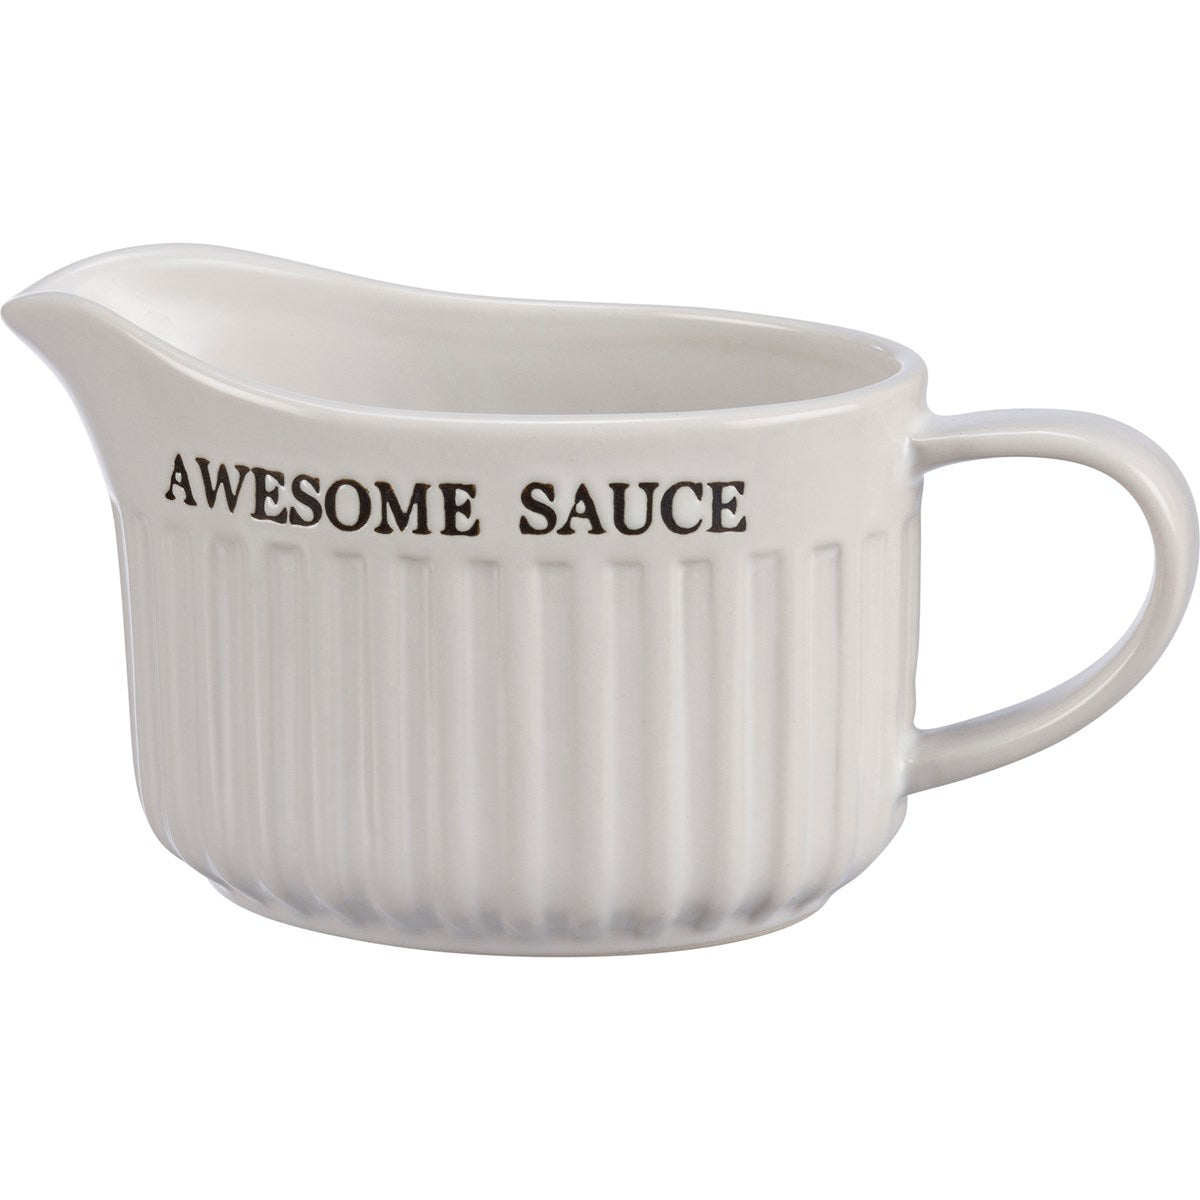 Awesome Sauce Gravy Boat White Ceramic